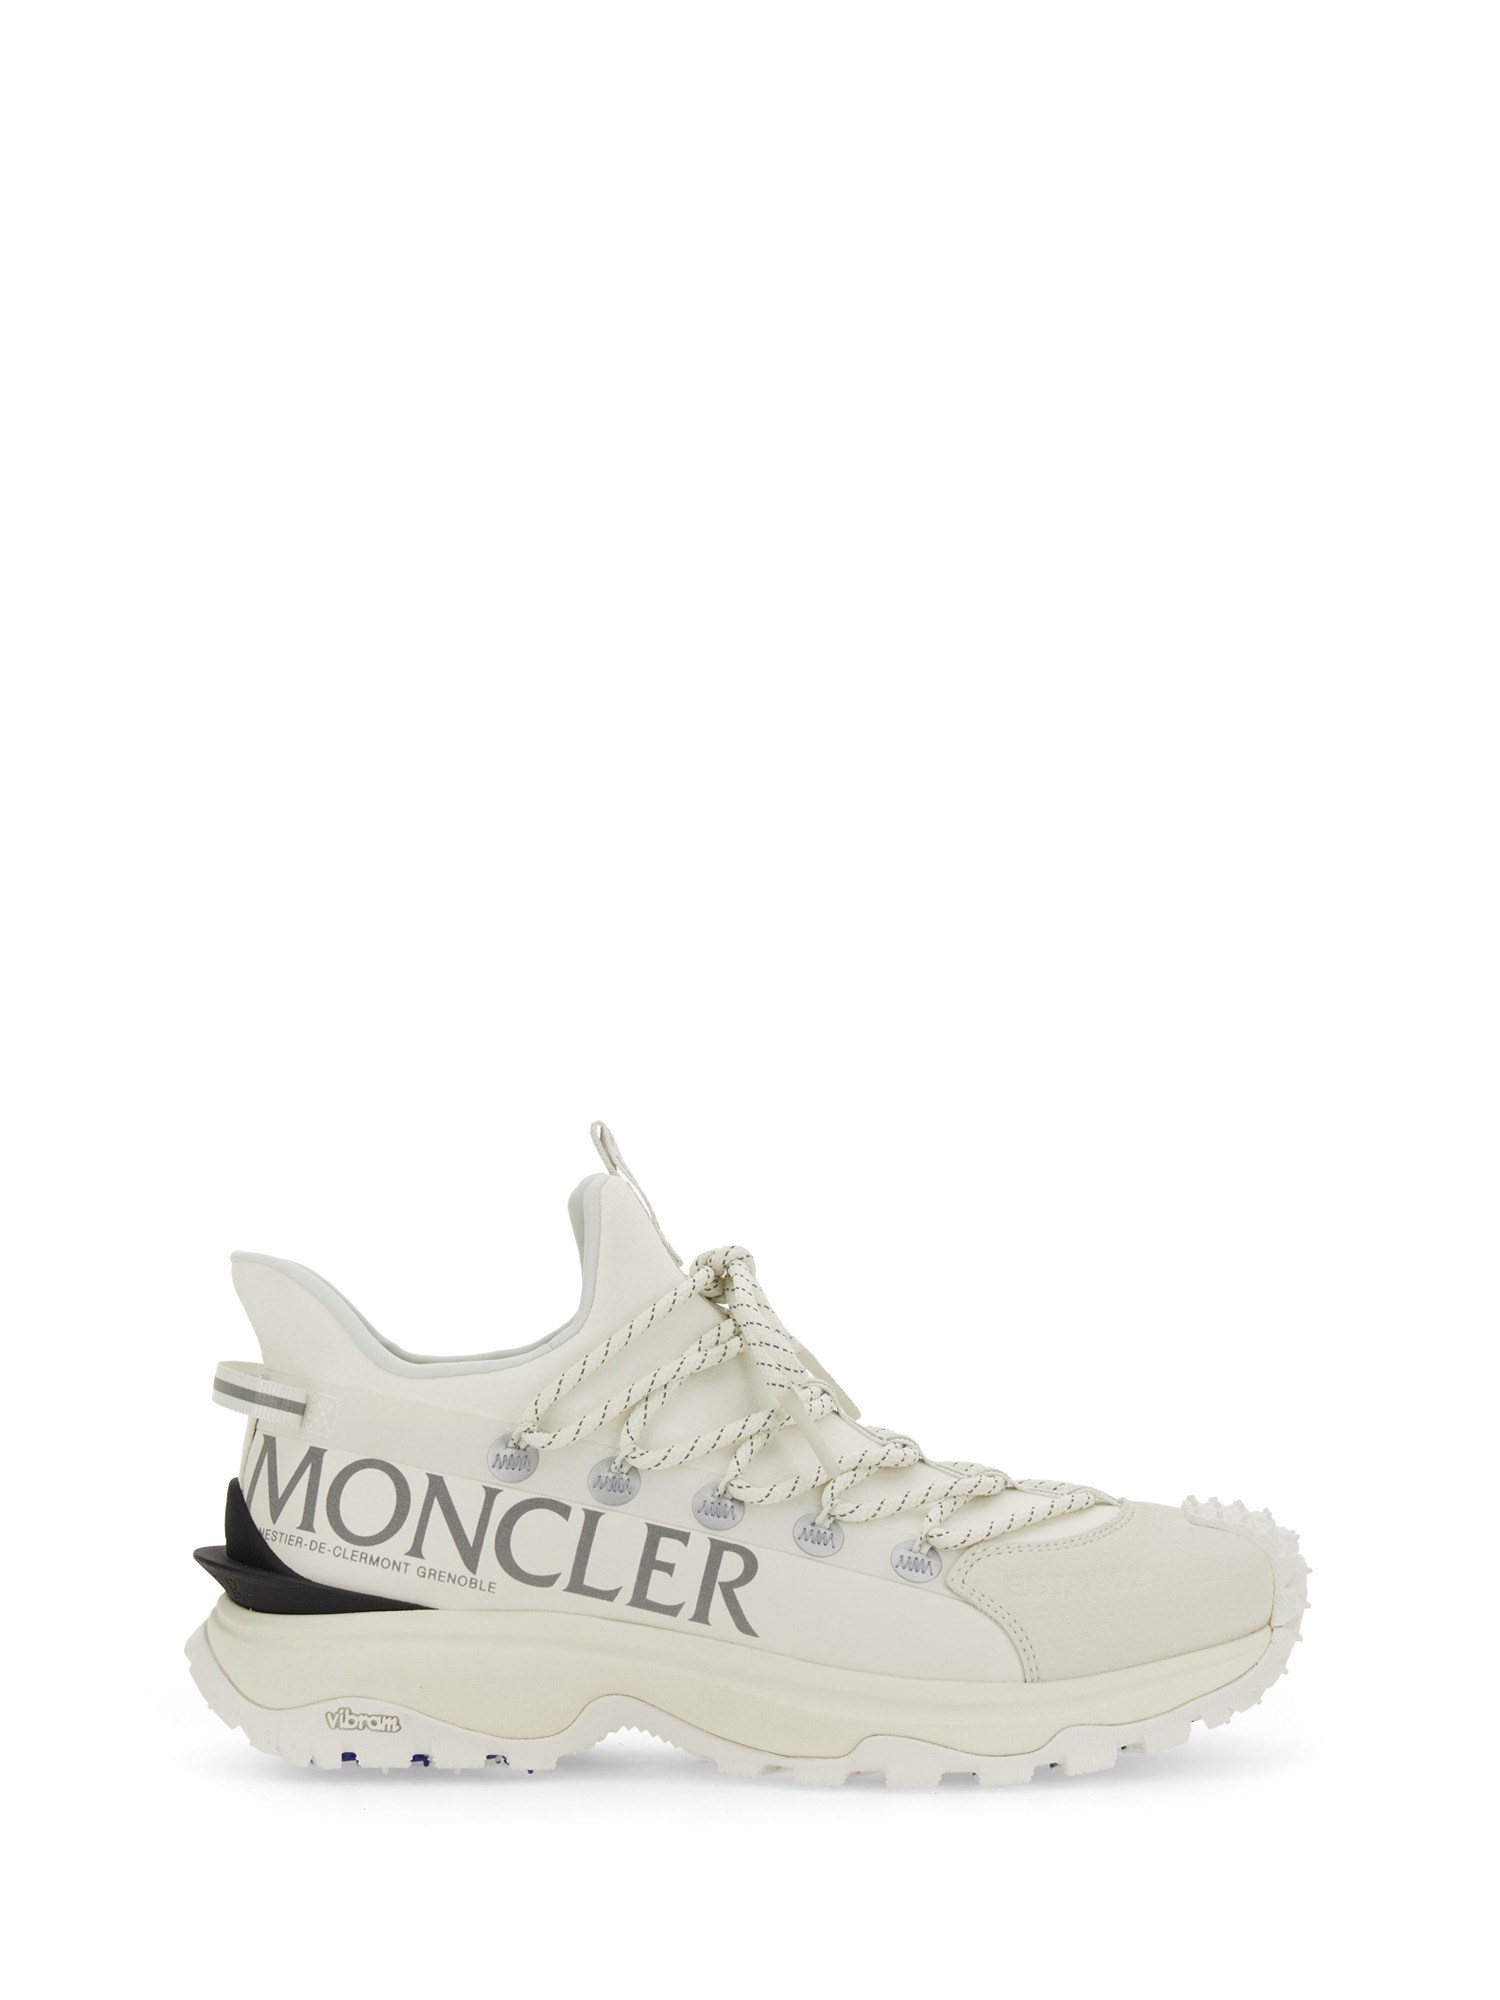 moncler low top sneaker 